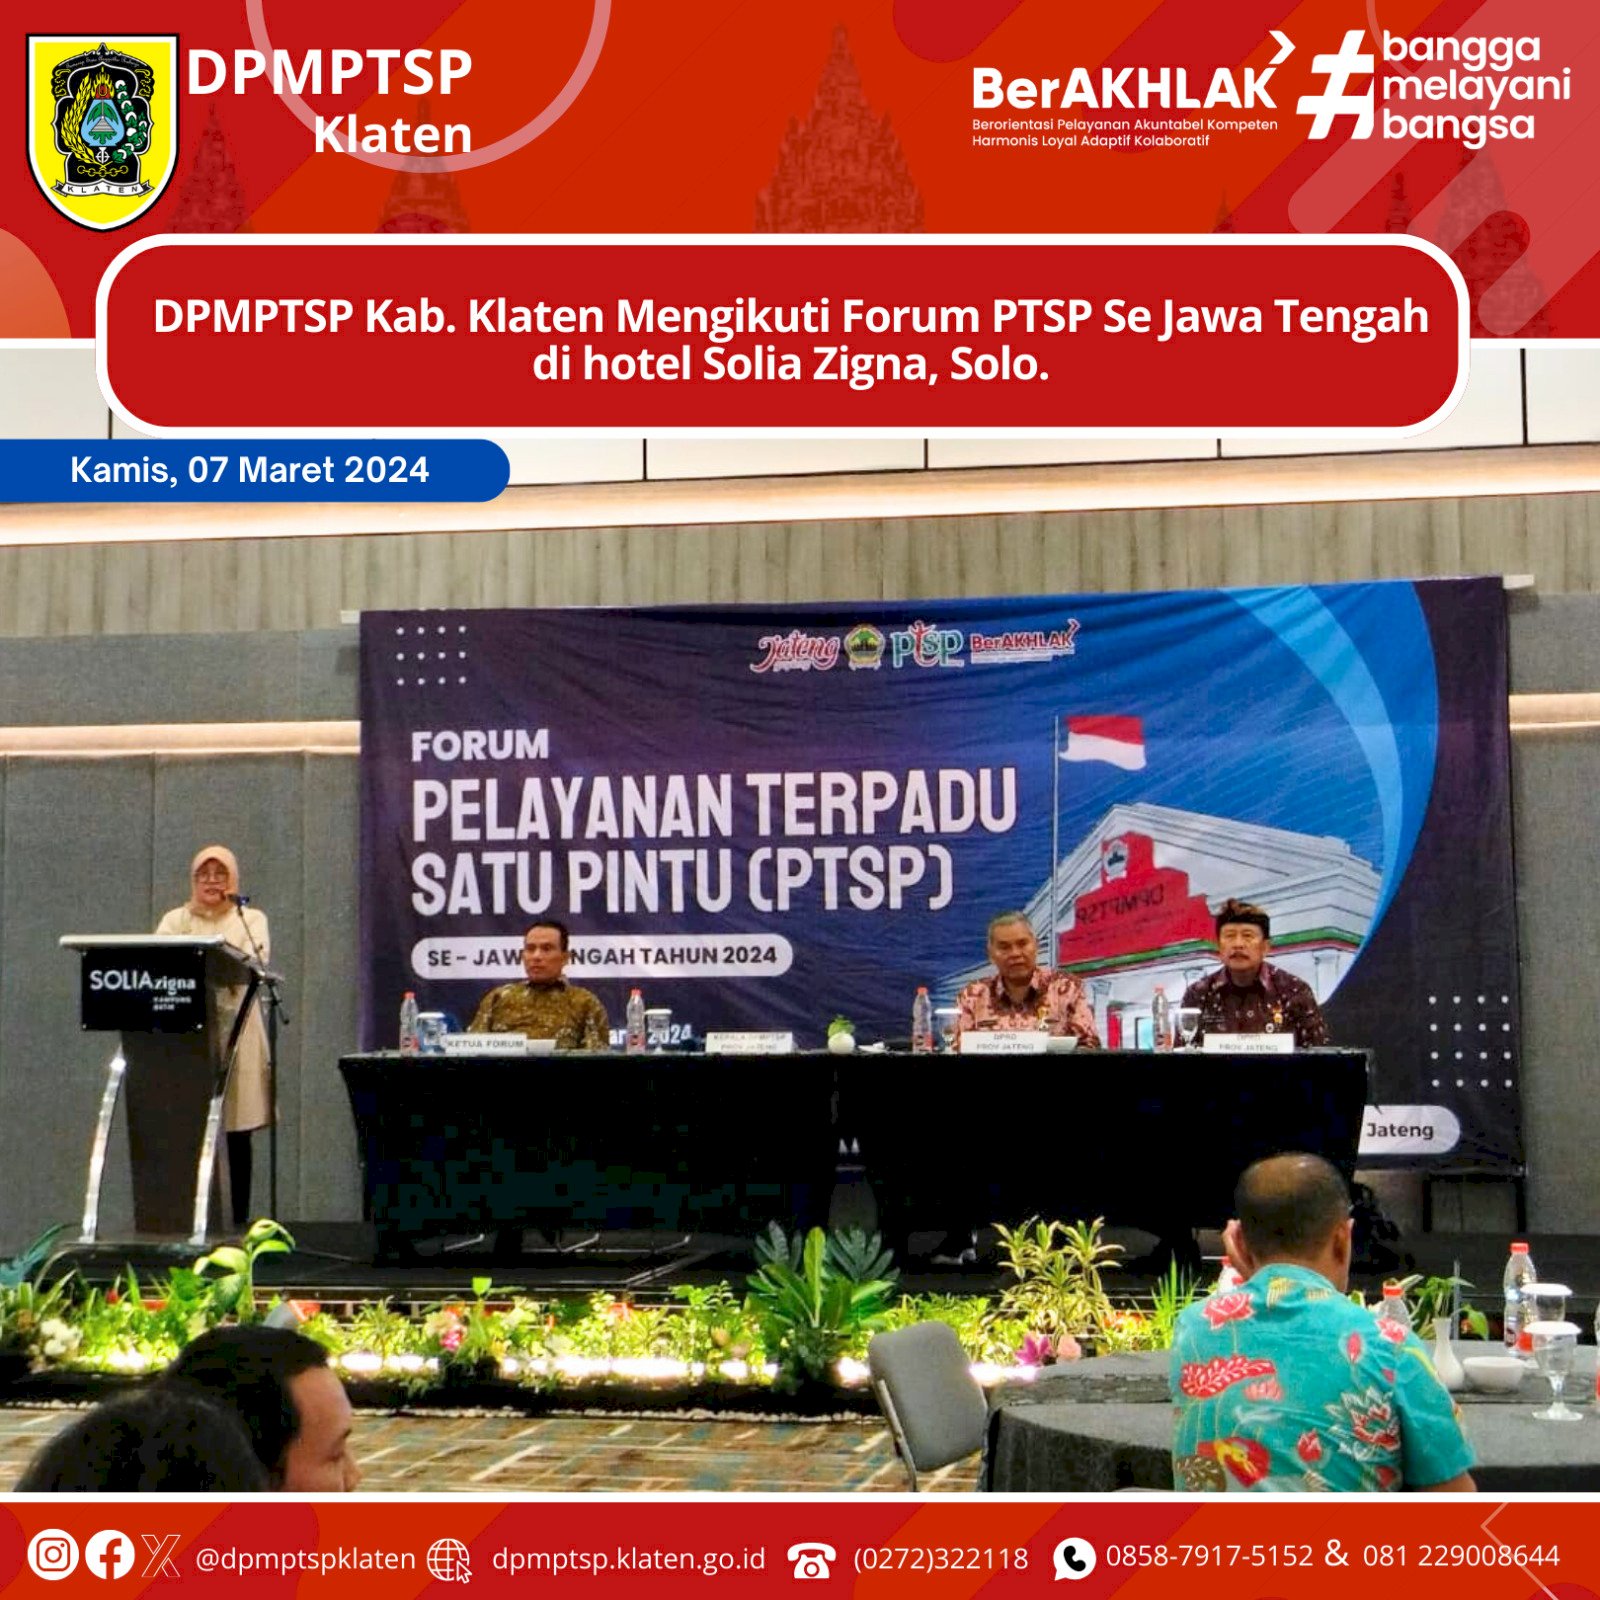 DPMPTSP kab. Klaten Mengikuti Forum PTSP Se Jawa Tengah pada tanggal 07-08 Maret 2024